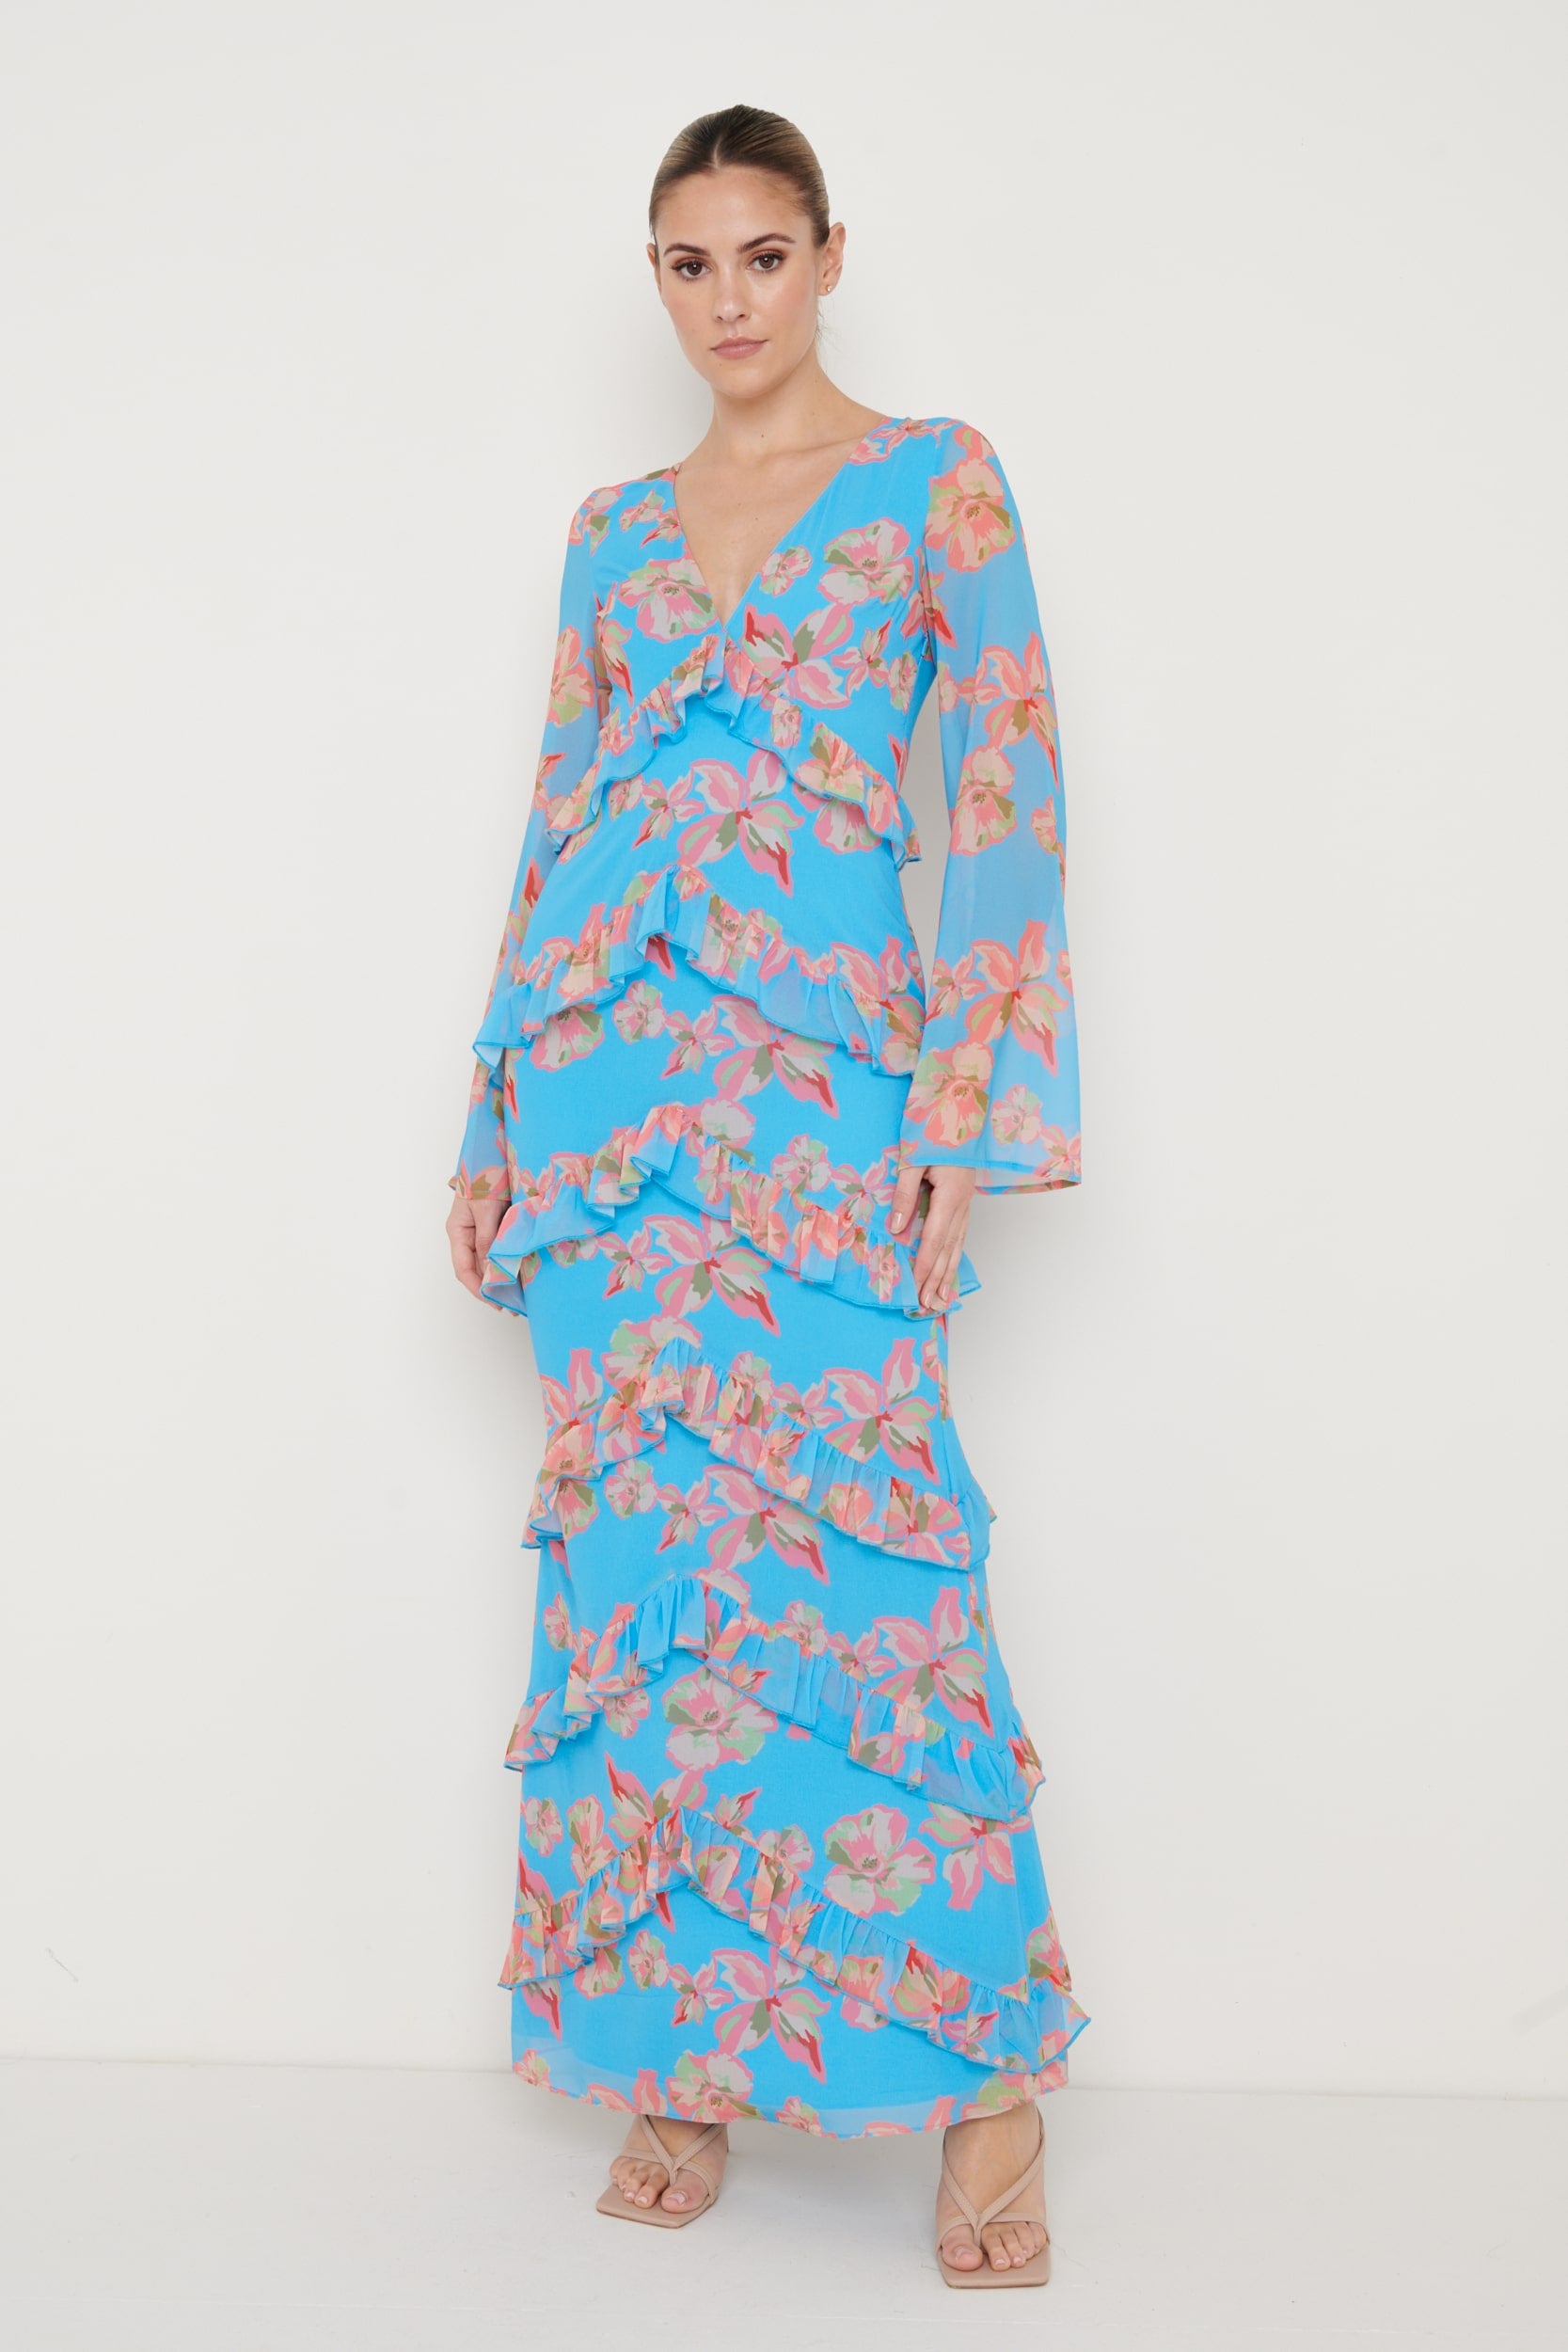 Paige Ruffle Maxi Dress - Blue Floral, 8